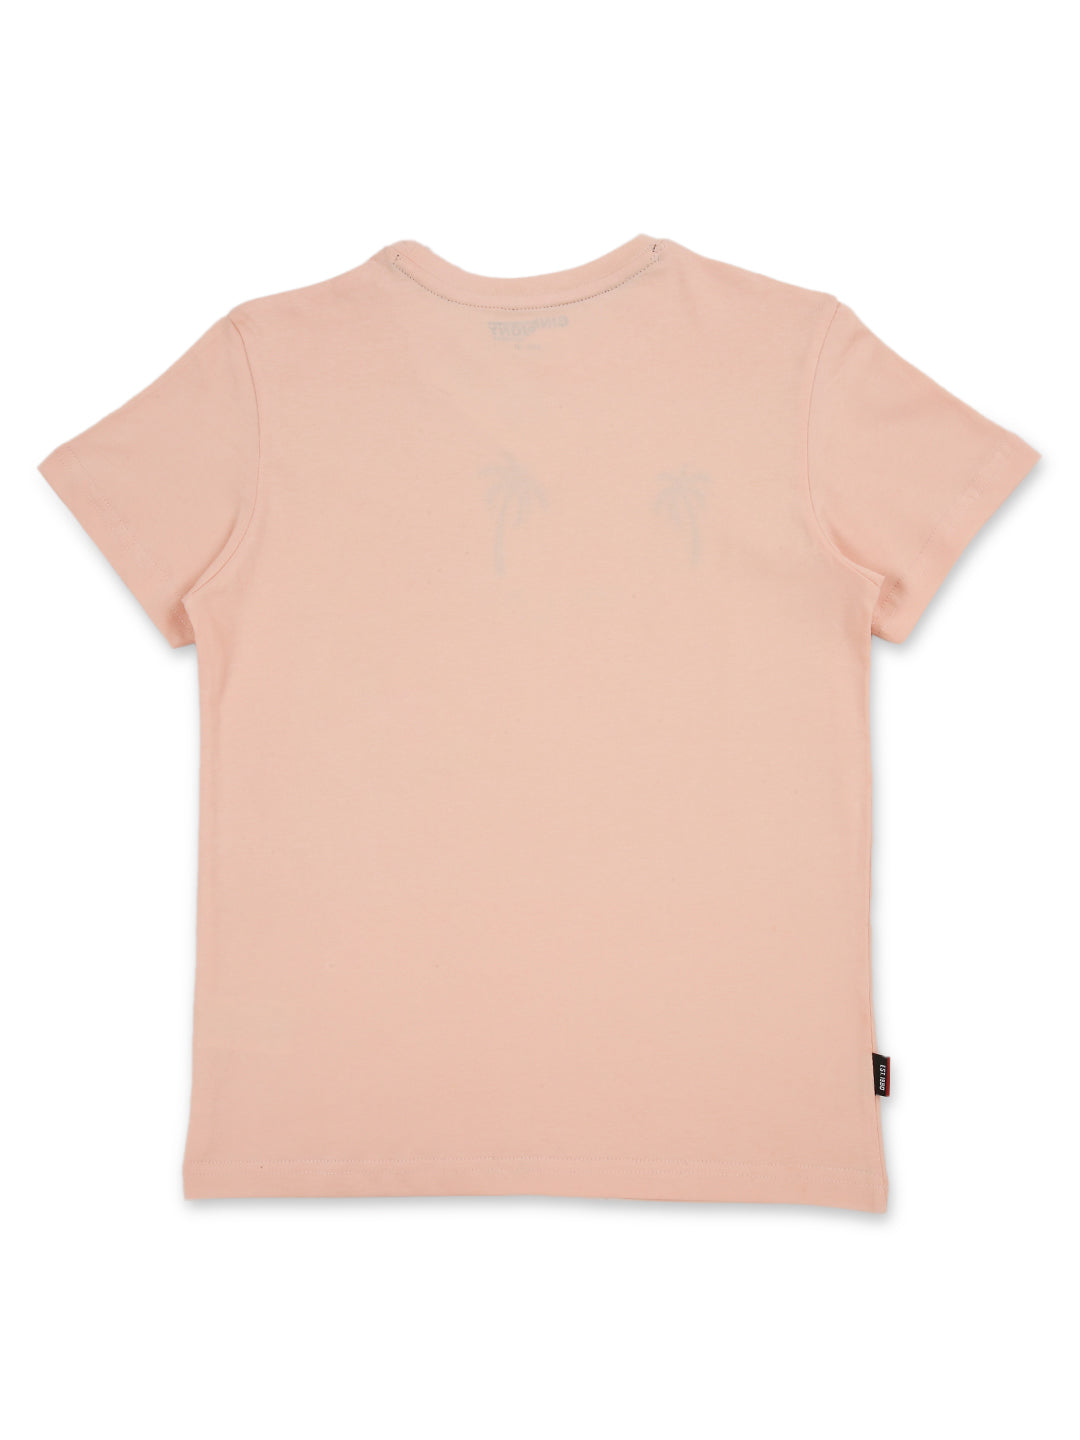 Boys Peach Cotton Solid T-Shirt